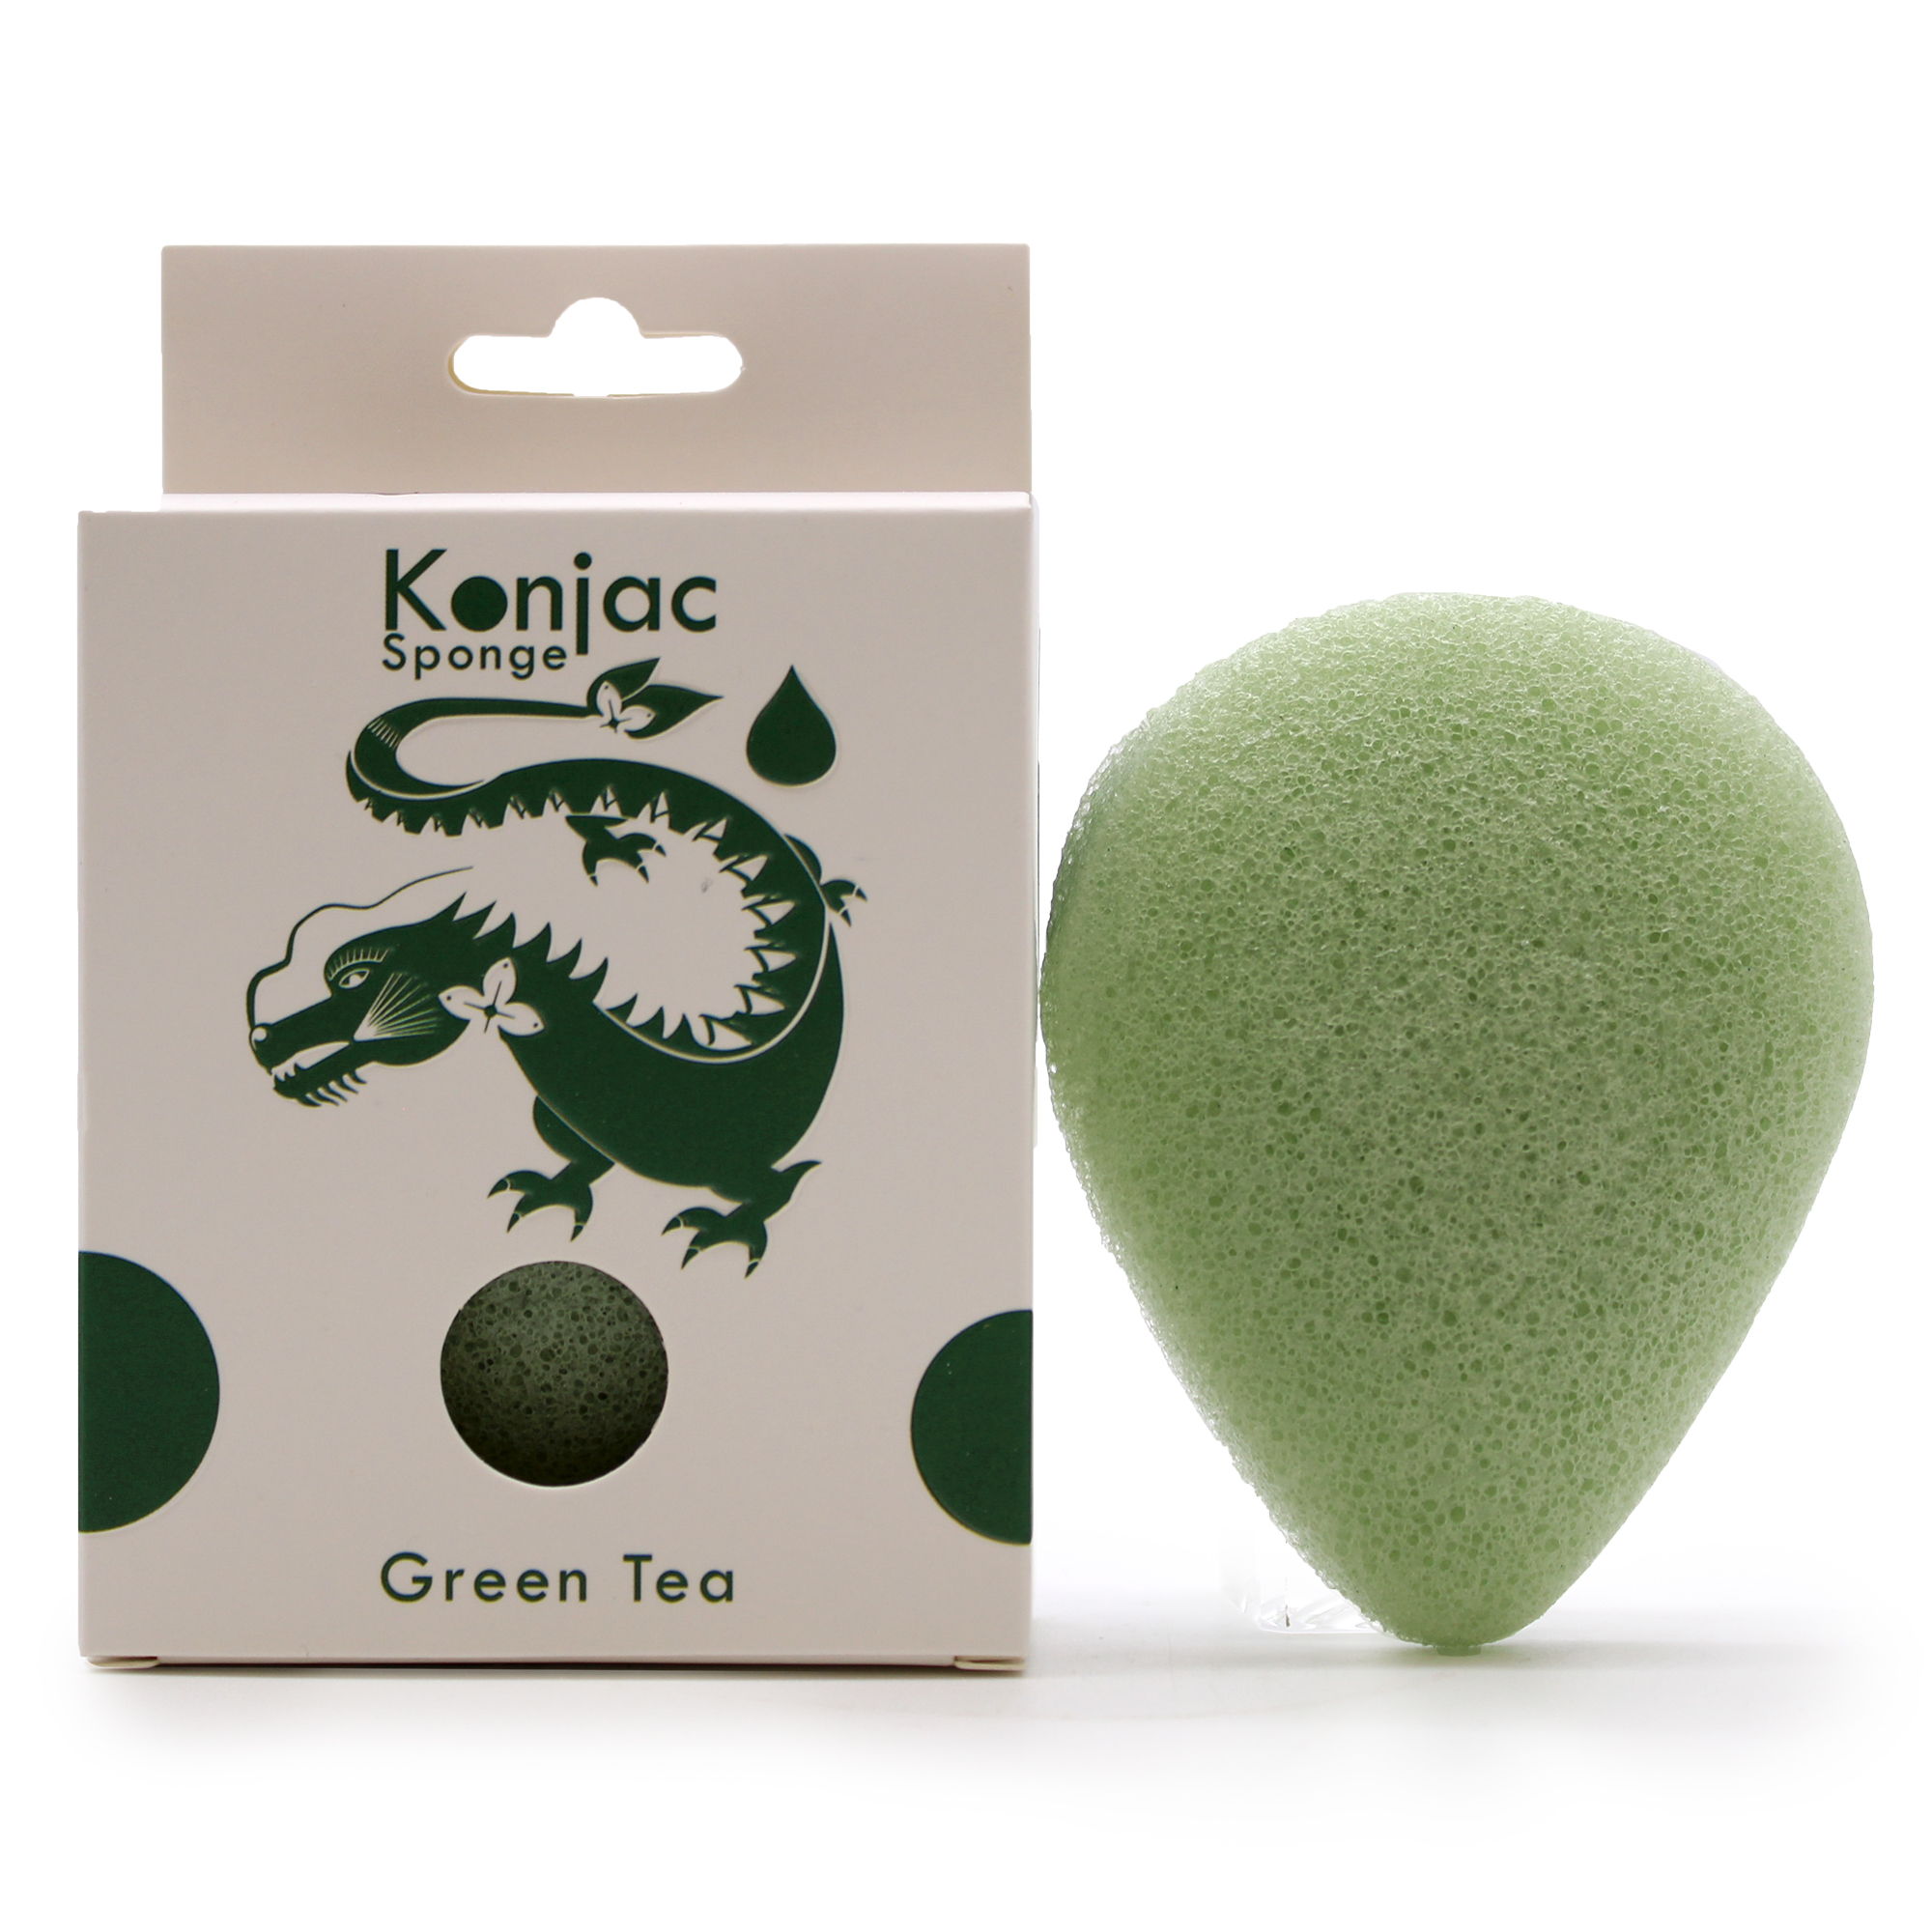 2 x Teardrop Konjac Sponges - Green Tea - Protective